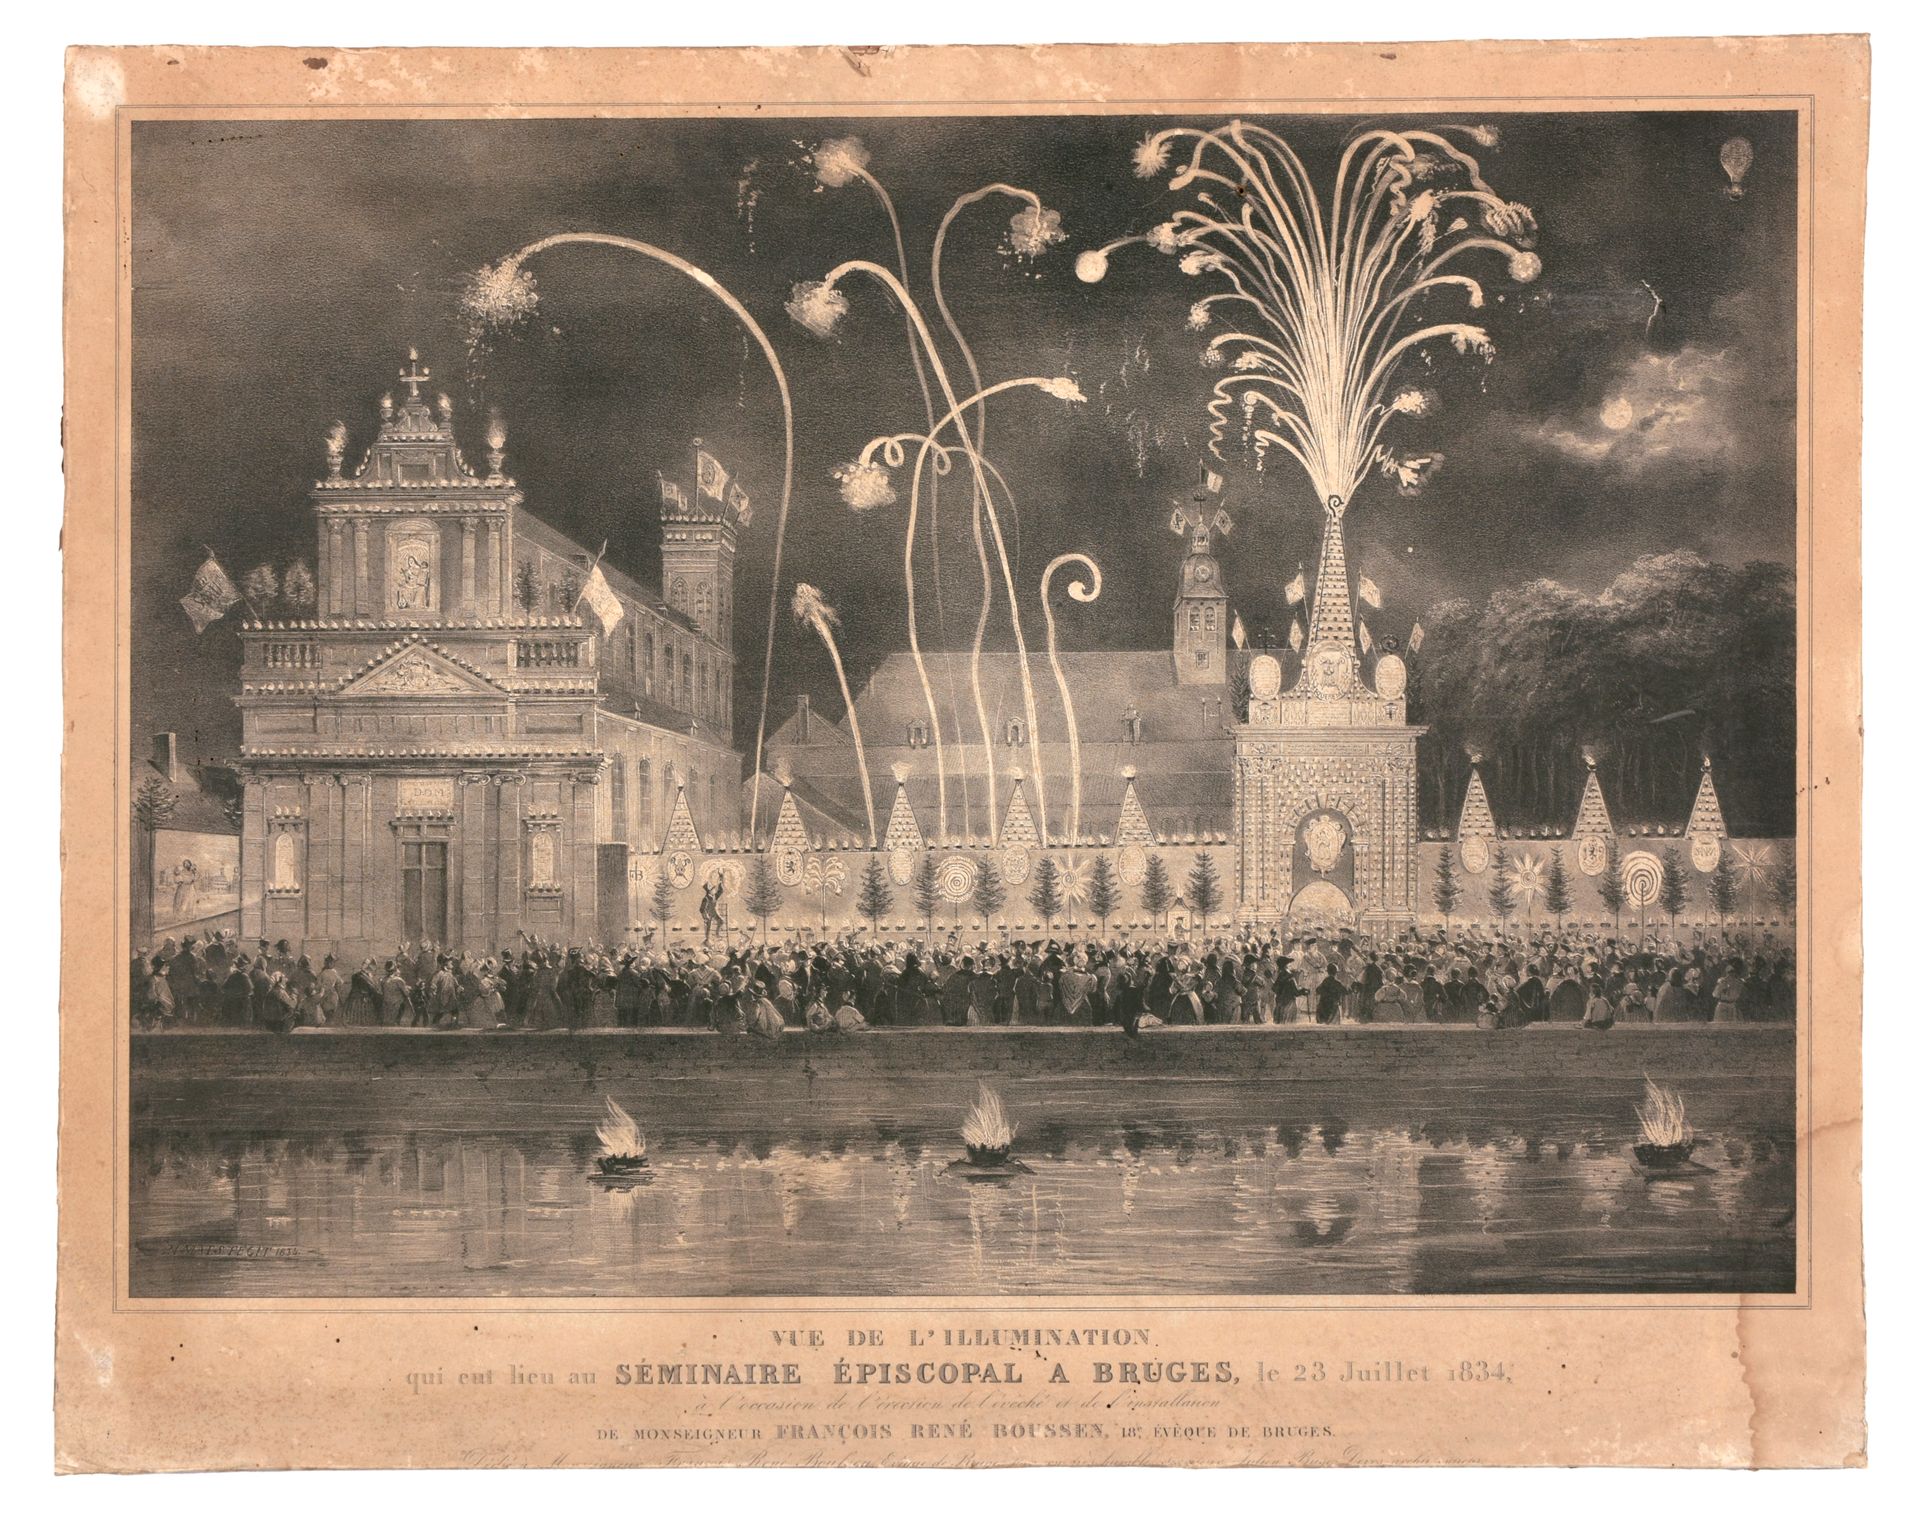 [BRUGGE - VUURWERK] 1834年7月23日在布鲁日主教神学院举行的照明活动的视图

Litho (52 x 65 cm), getekend &hellip;